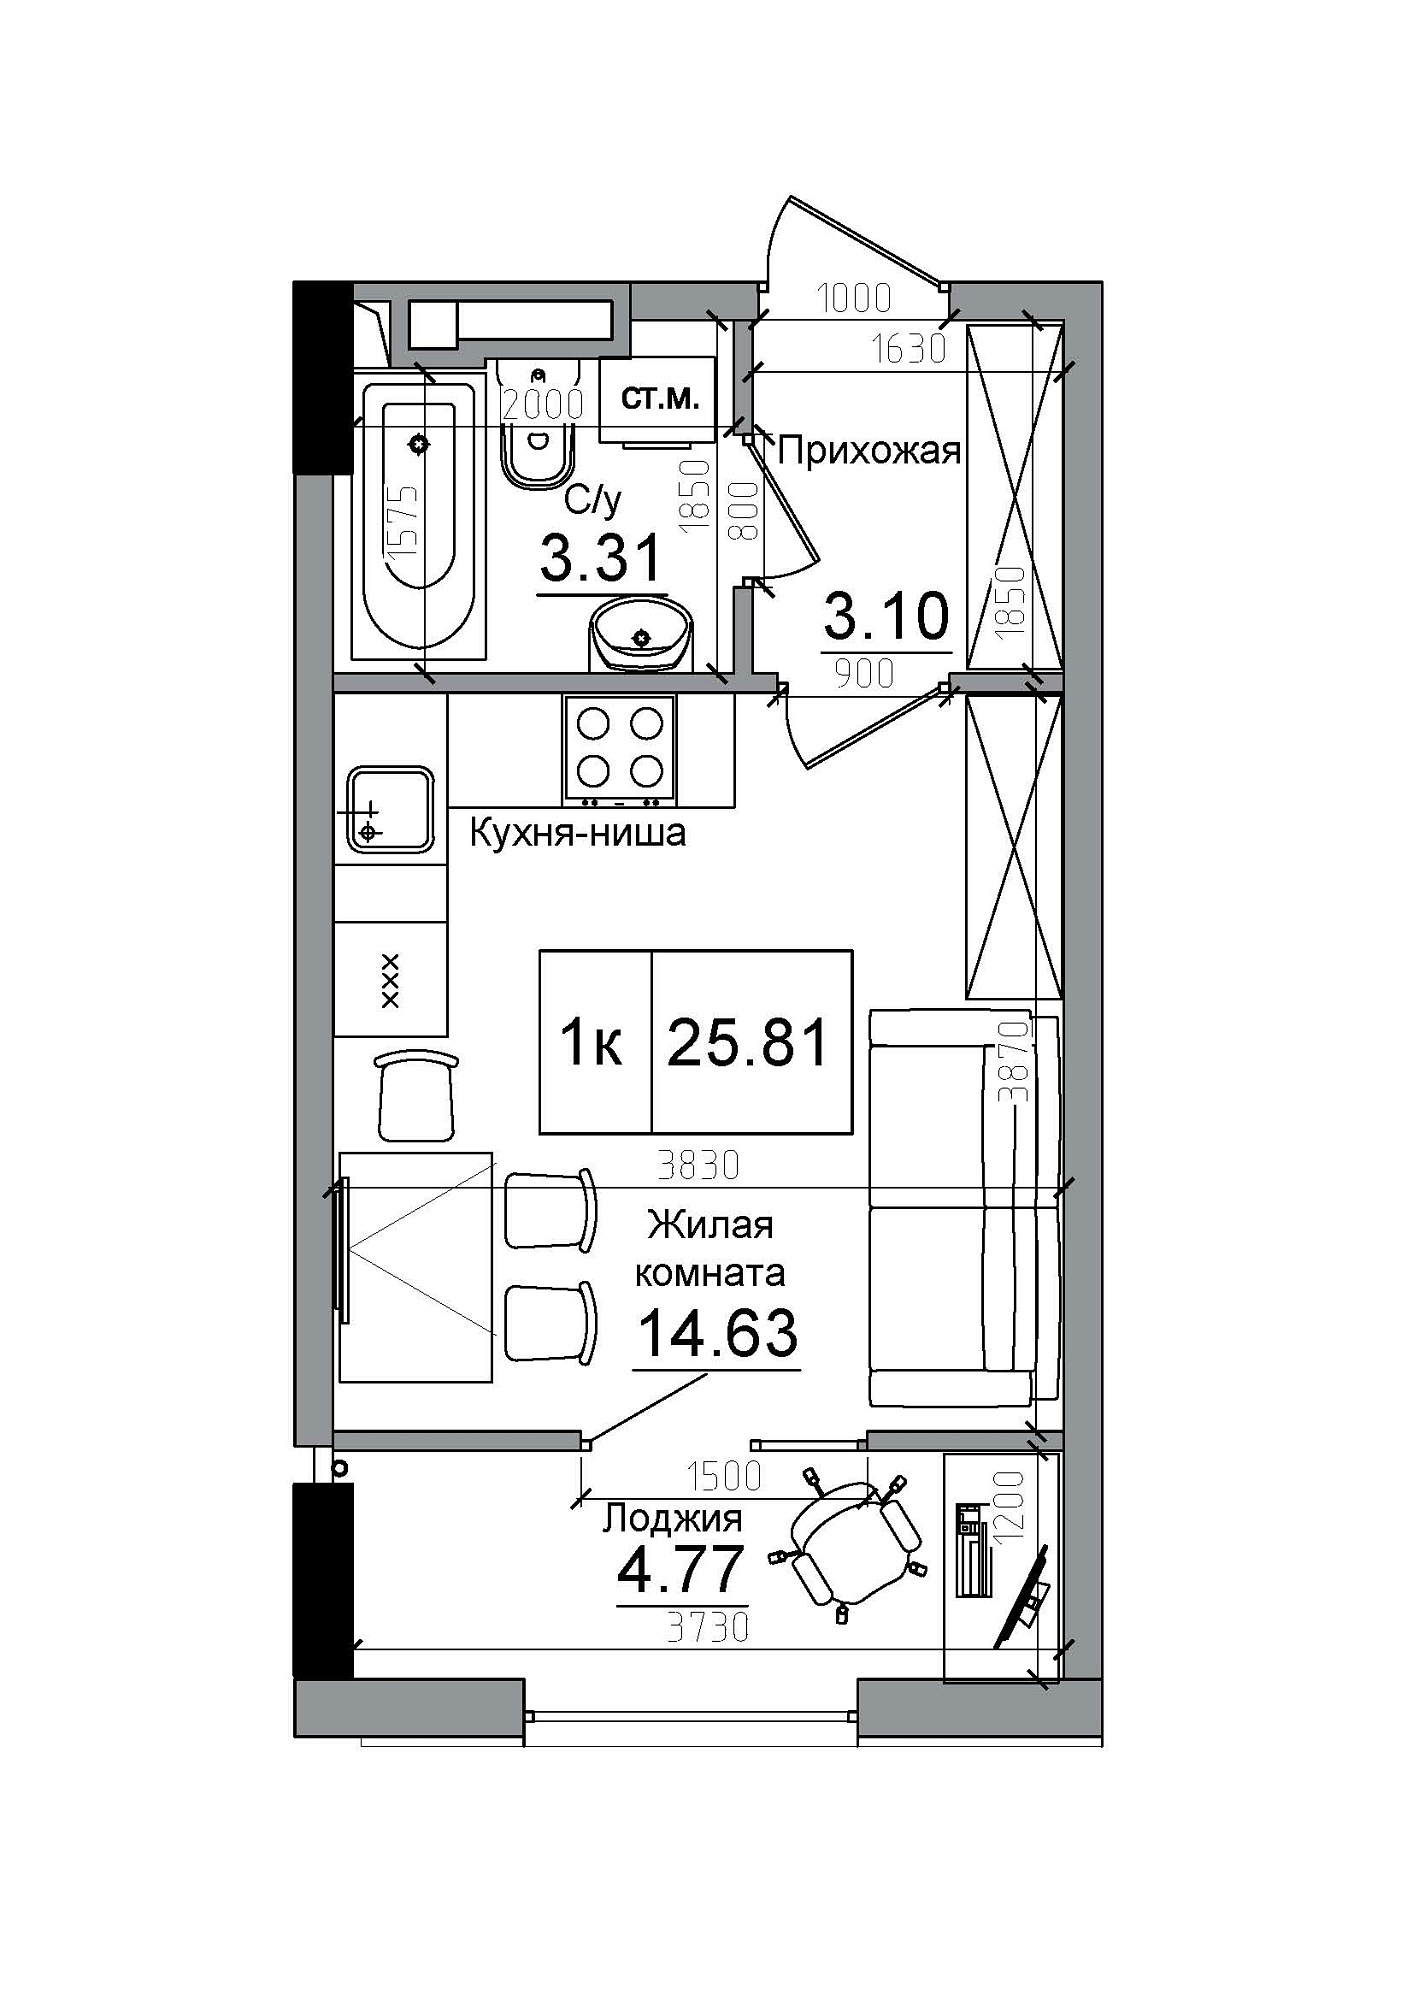 Planning Smart flats area 25.81m2, AB-12-12/00013.